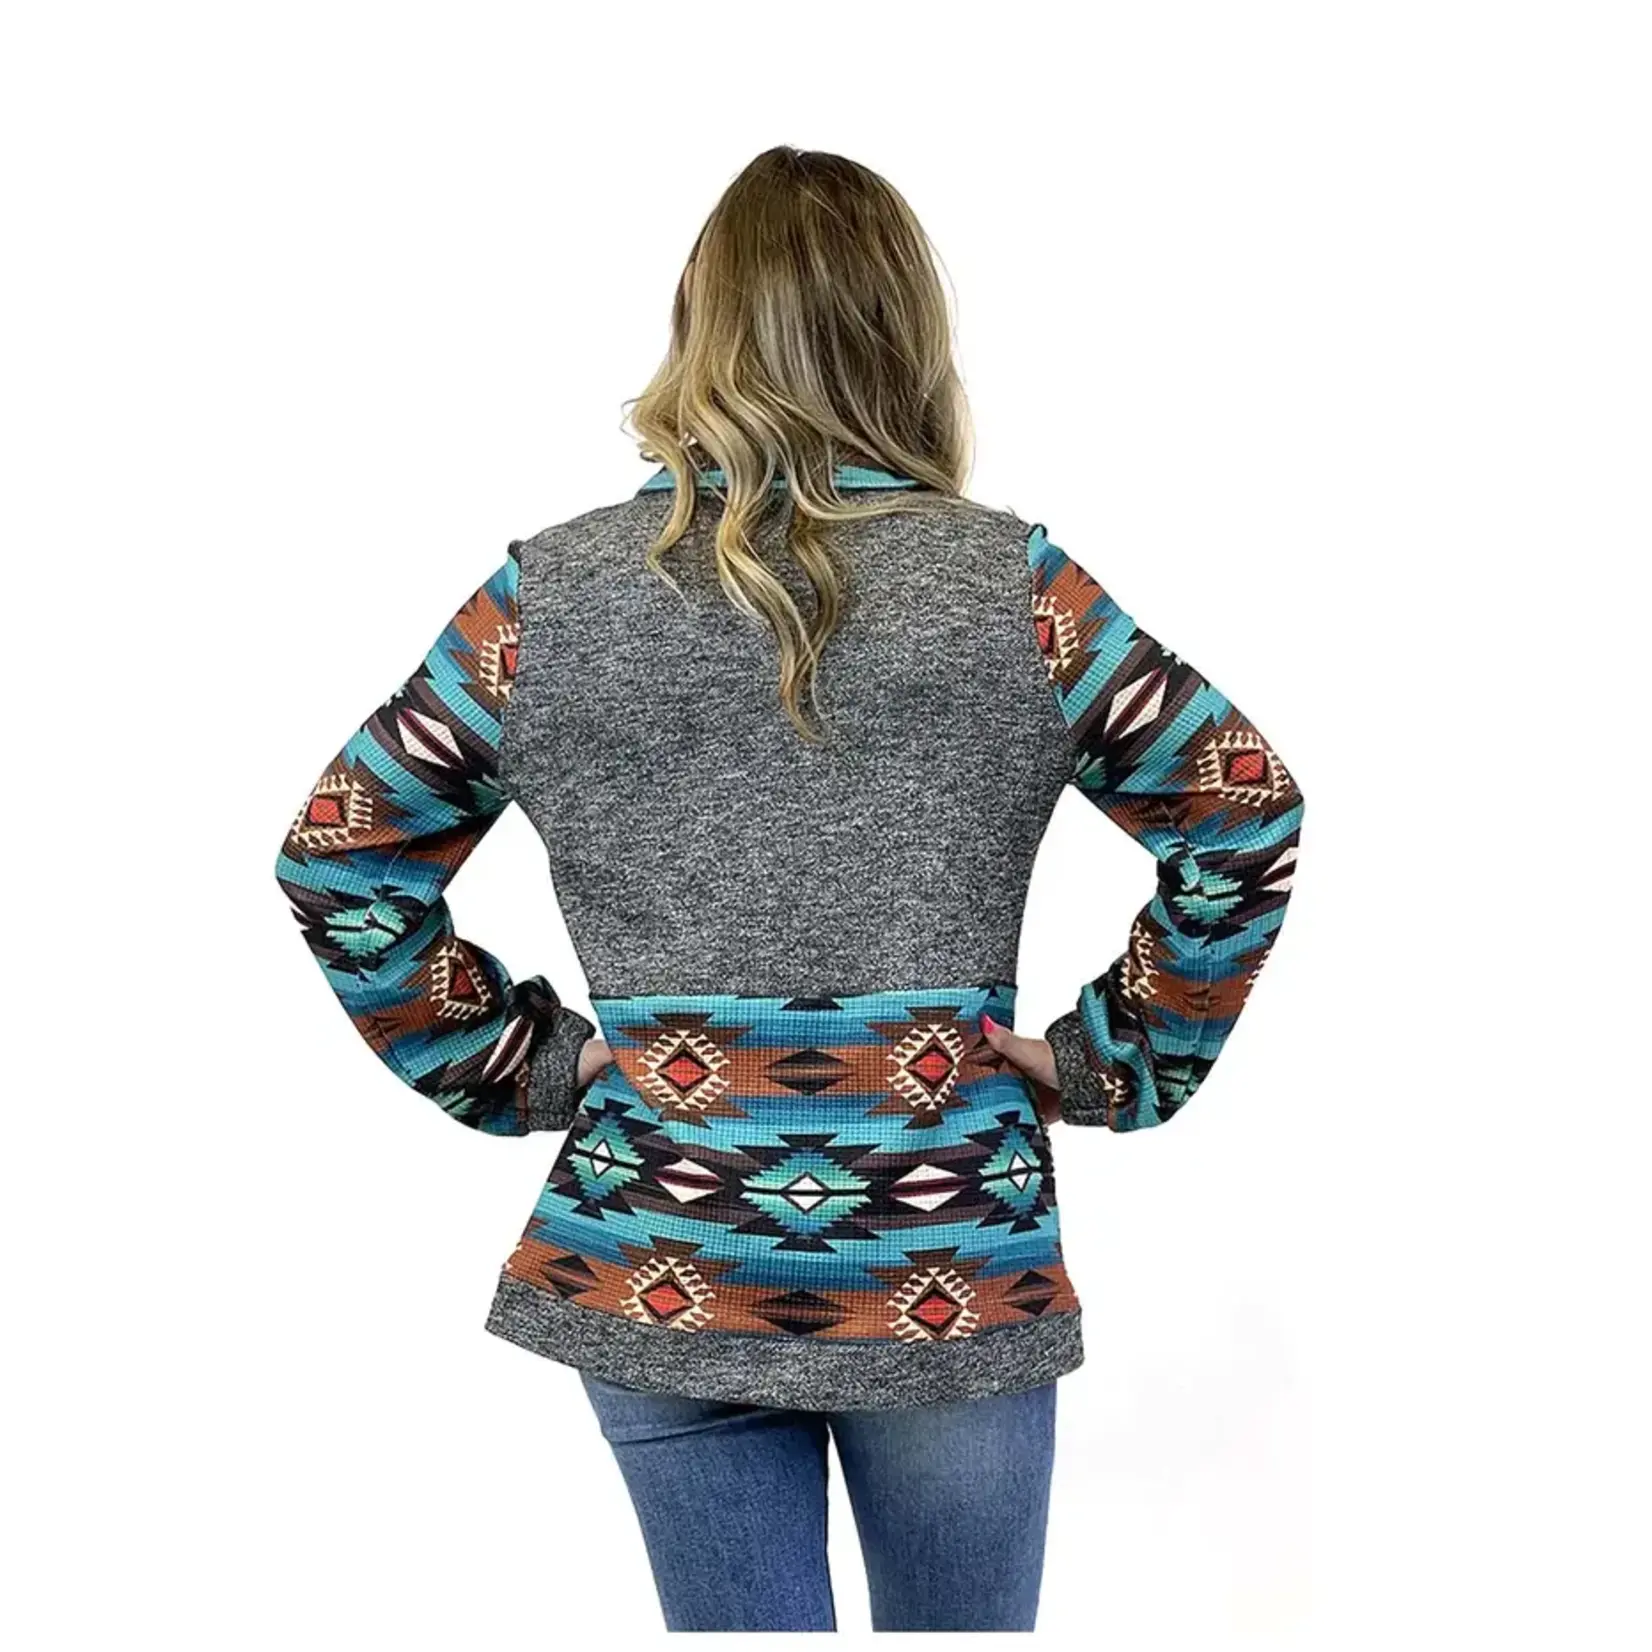 Fashion Express Women’s Zip Up Aztec Print Jacket - T1042